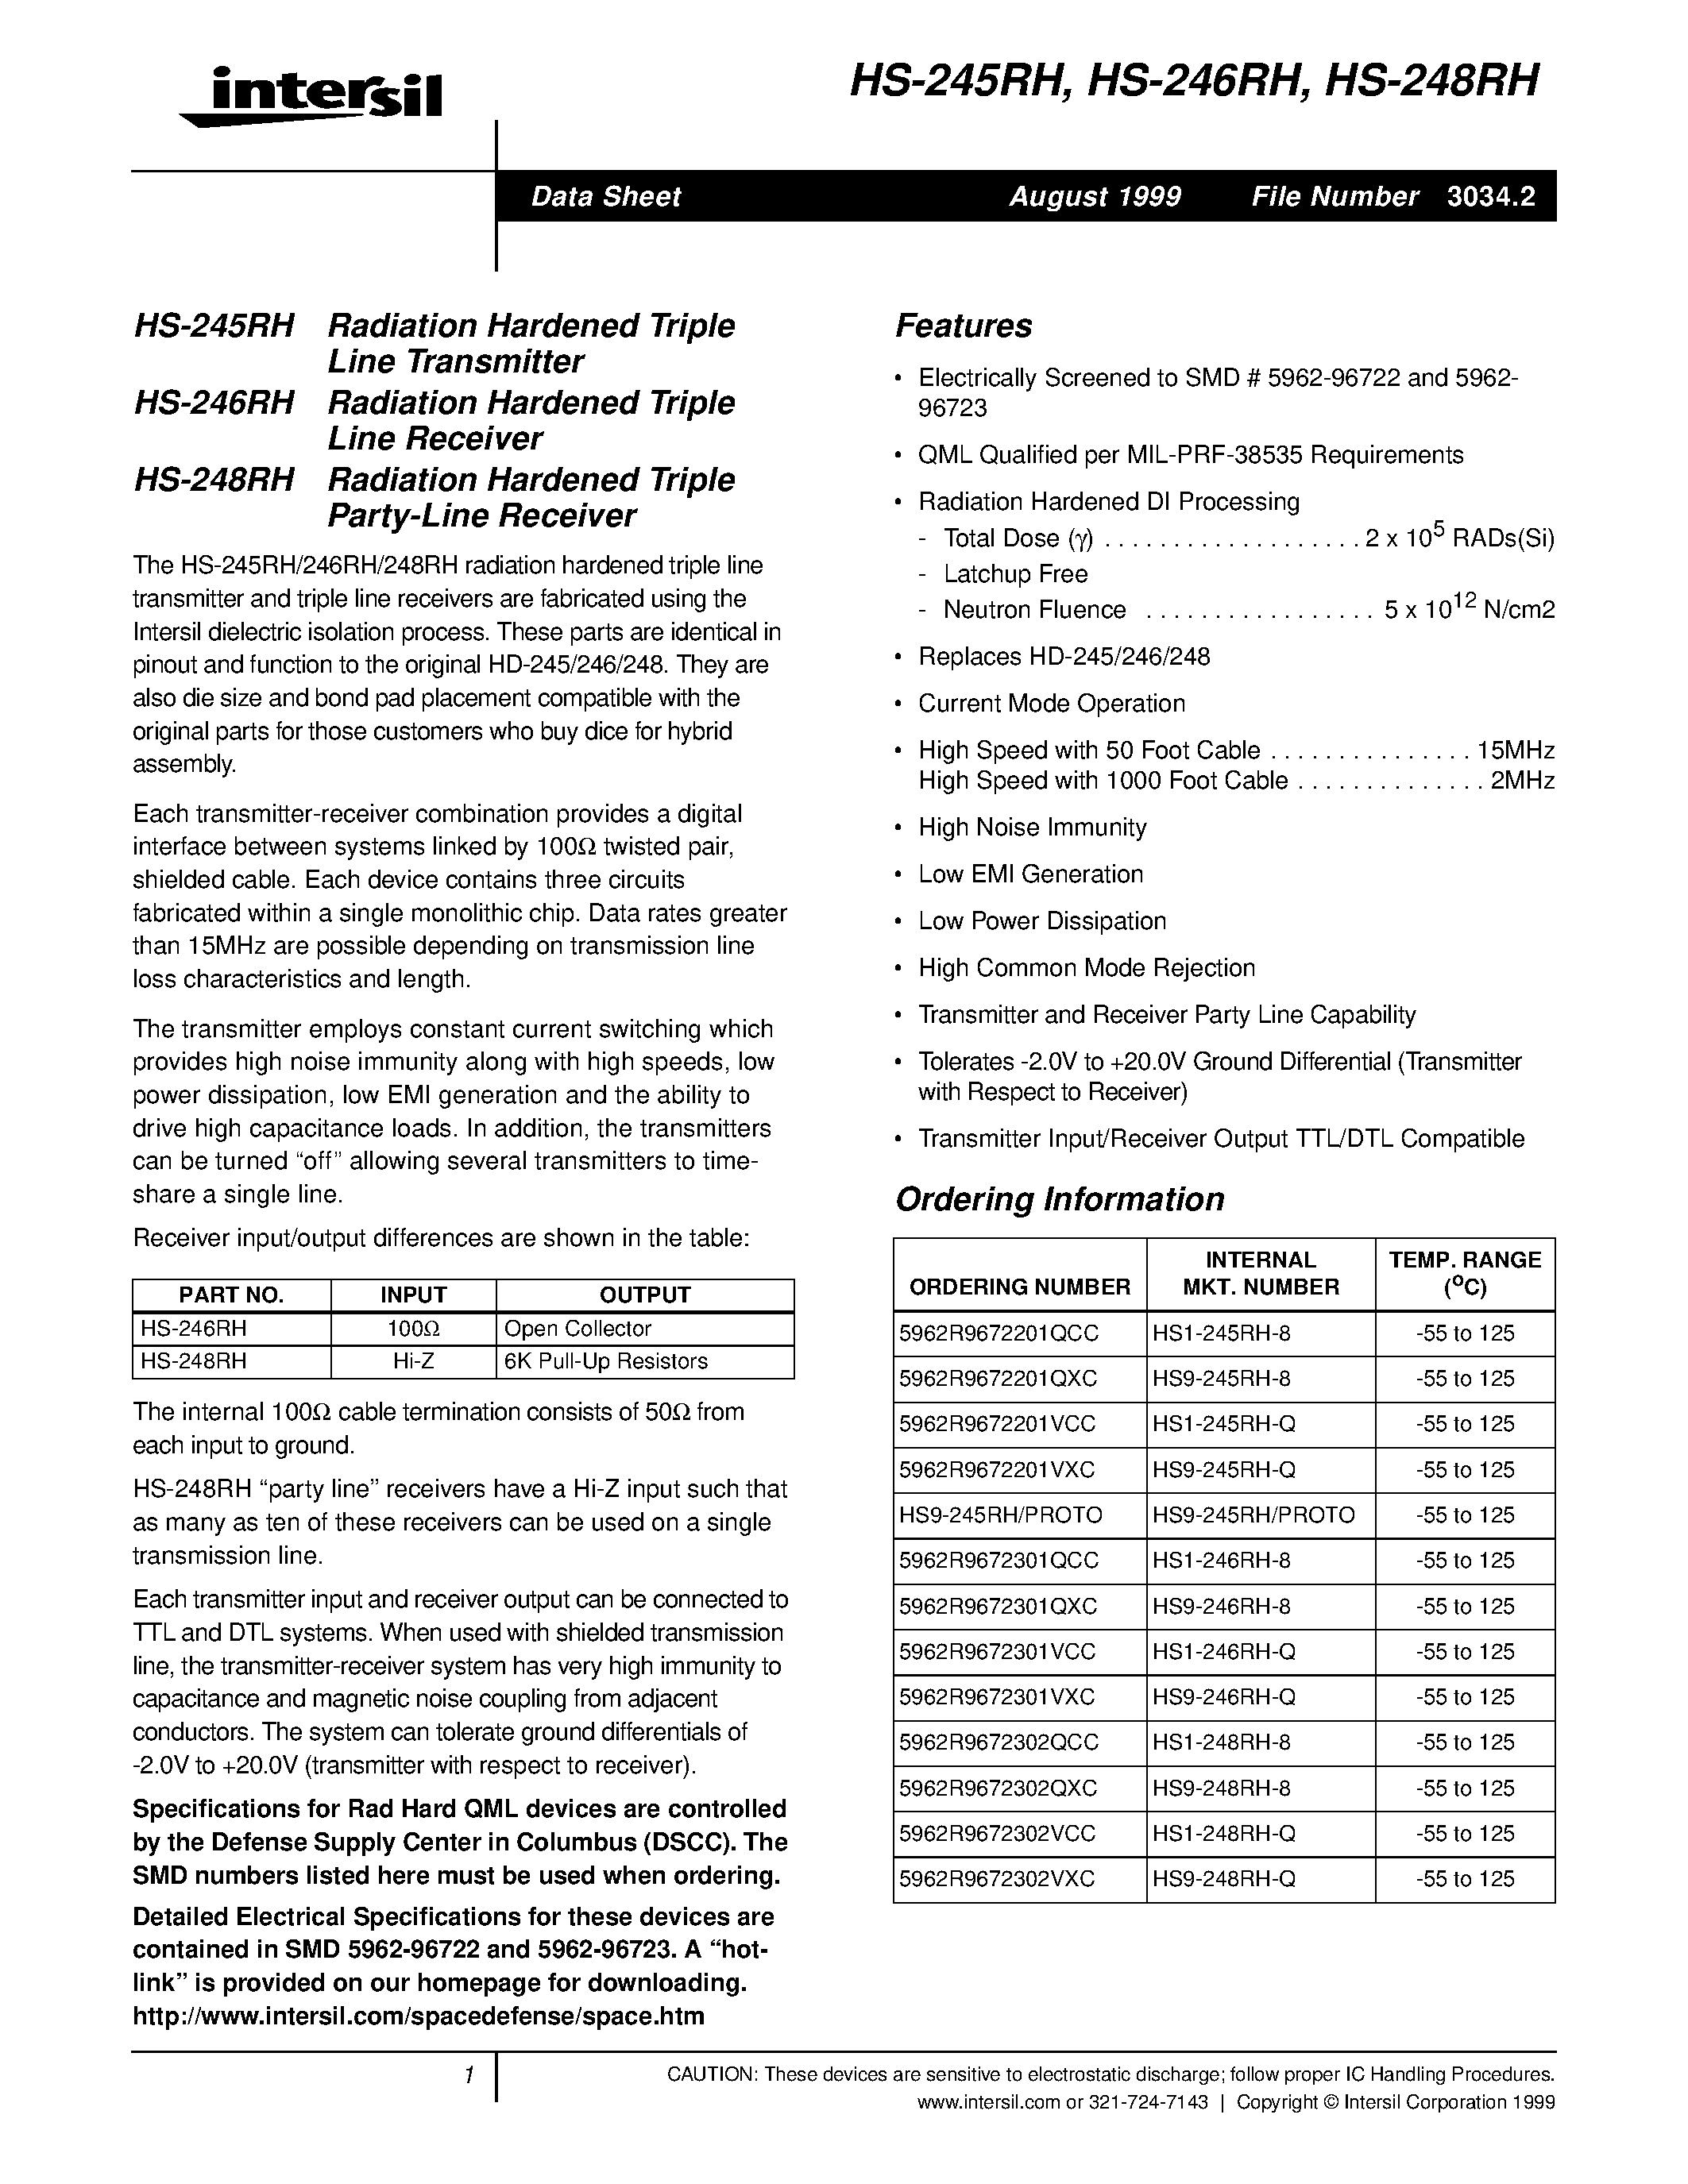 Datasheet HS9-246RH-8 - Radiation Hardened Triple Line(party-Line) Transmitter page 1